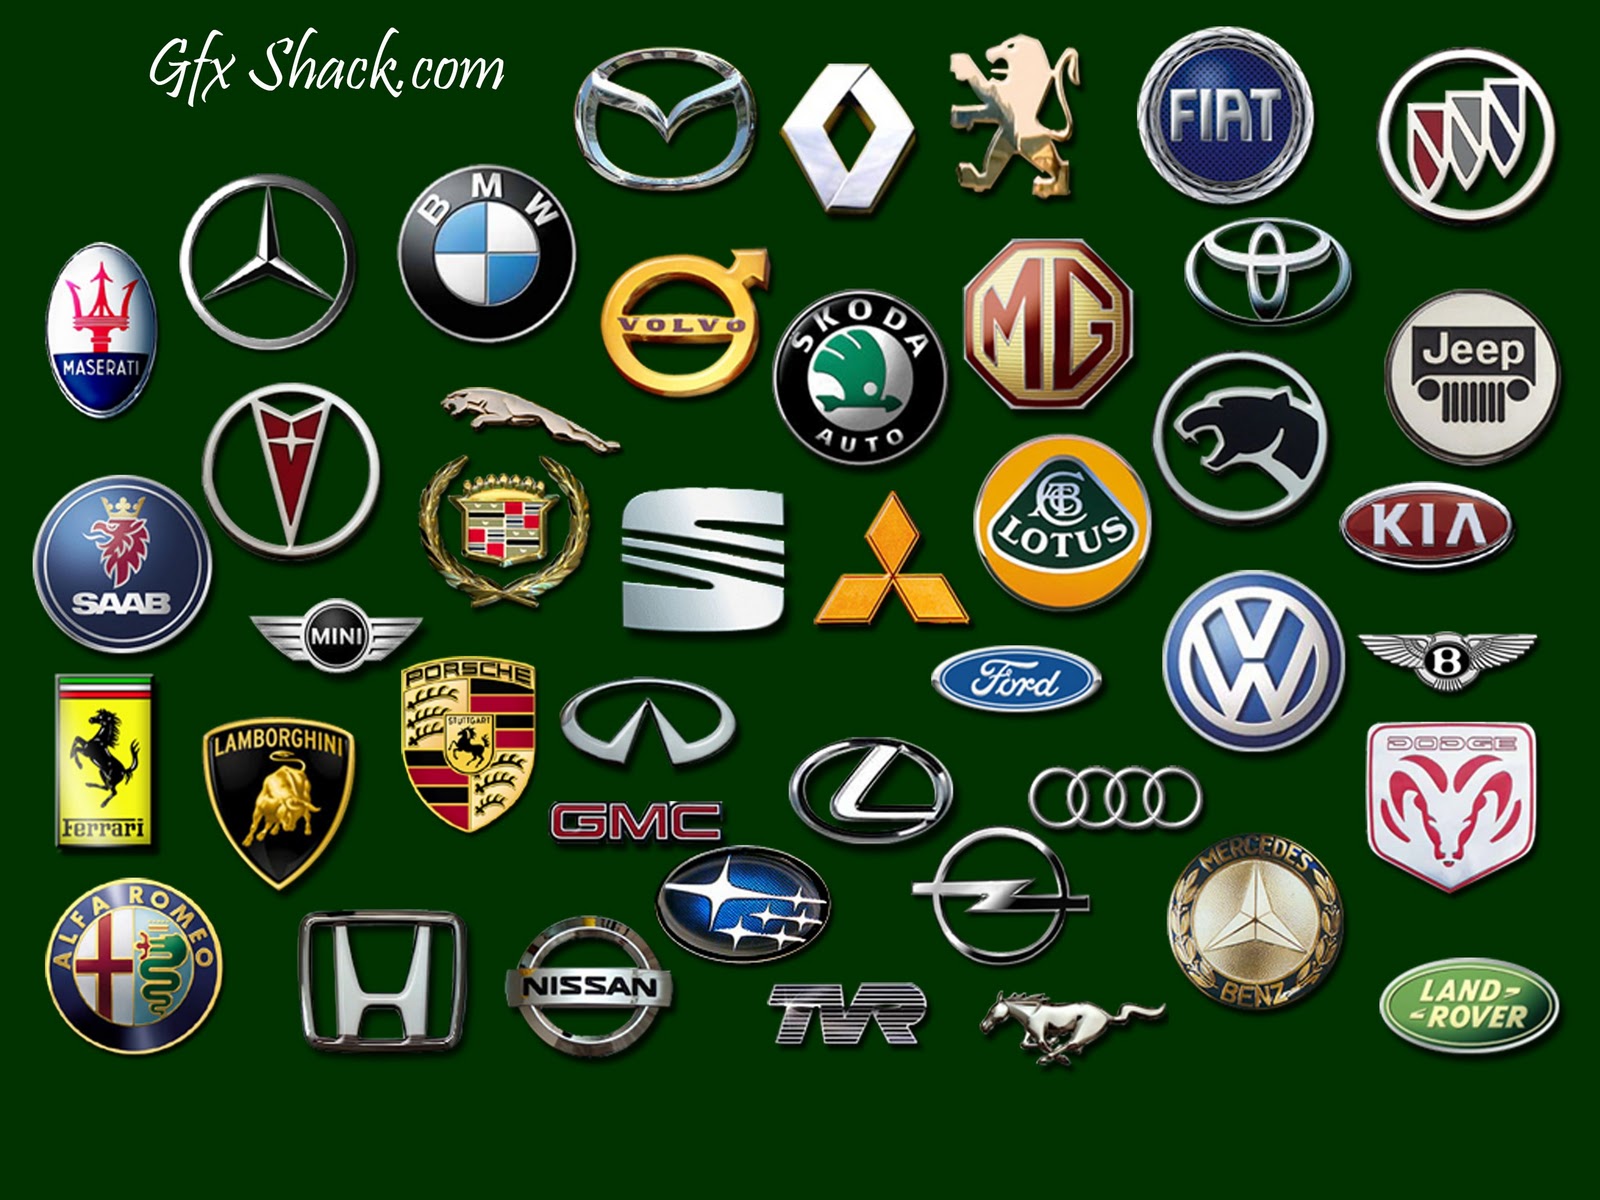 https://blogger.googleusercontent.com/img/b/R29vZ2xl/AVvXsEjPsfkT5JnX_4Yk1VZSyiuP4gcwqjIqyPA2pJ4ZaKyquTDgIq8kVZKBgYUxseHbllX26doJFllCbC89pA2RLPy8g3nZkjUBkMyAC1eGVlkN98DIDWEQT7vMjJFNqDmAqaDce0nt9GRWTZk/s1600/d_000108-World+Famous+Car+Logos.jpg